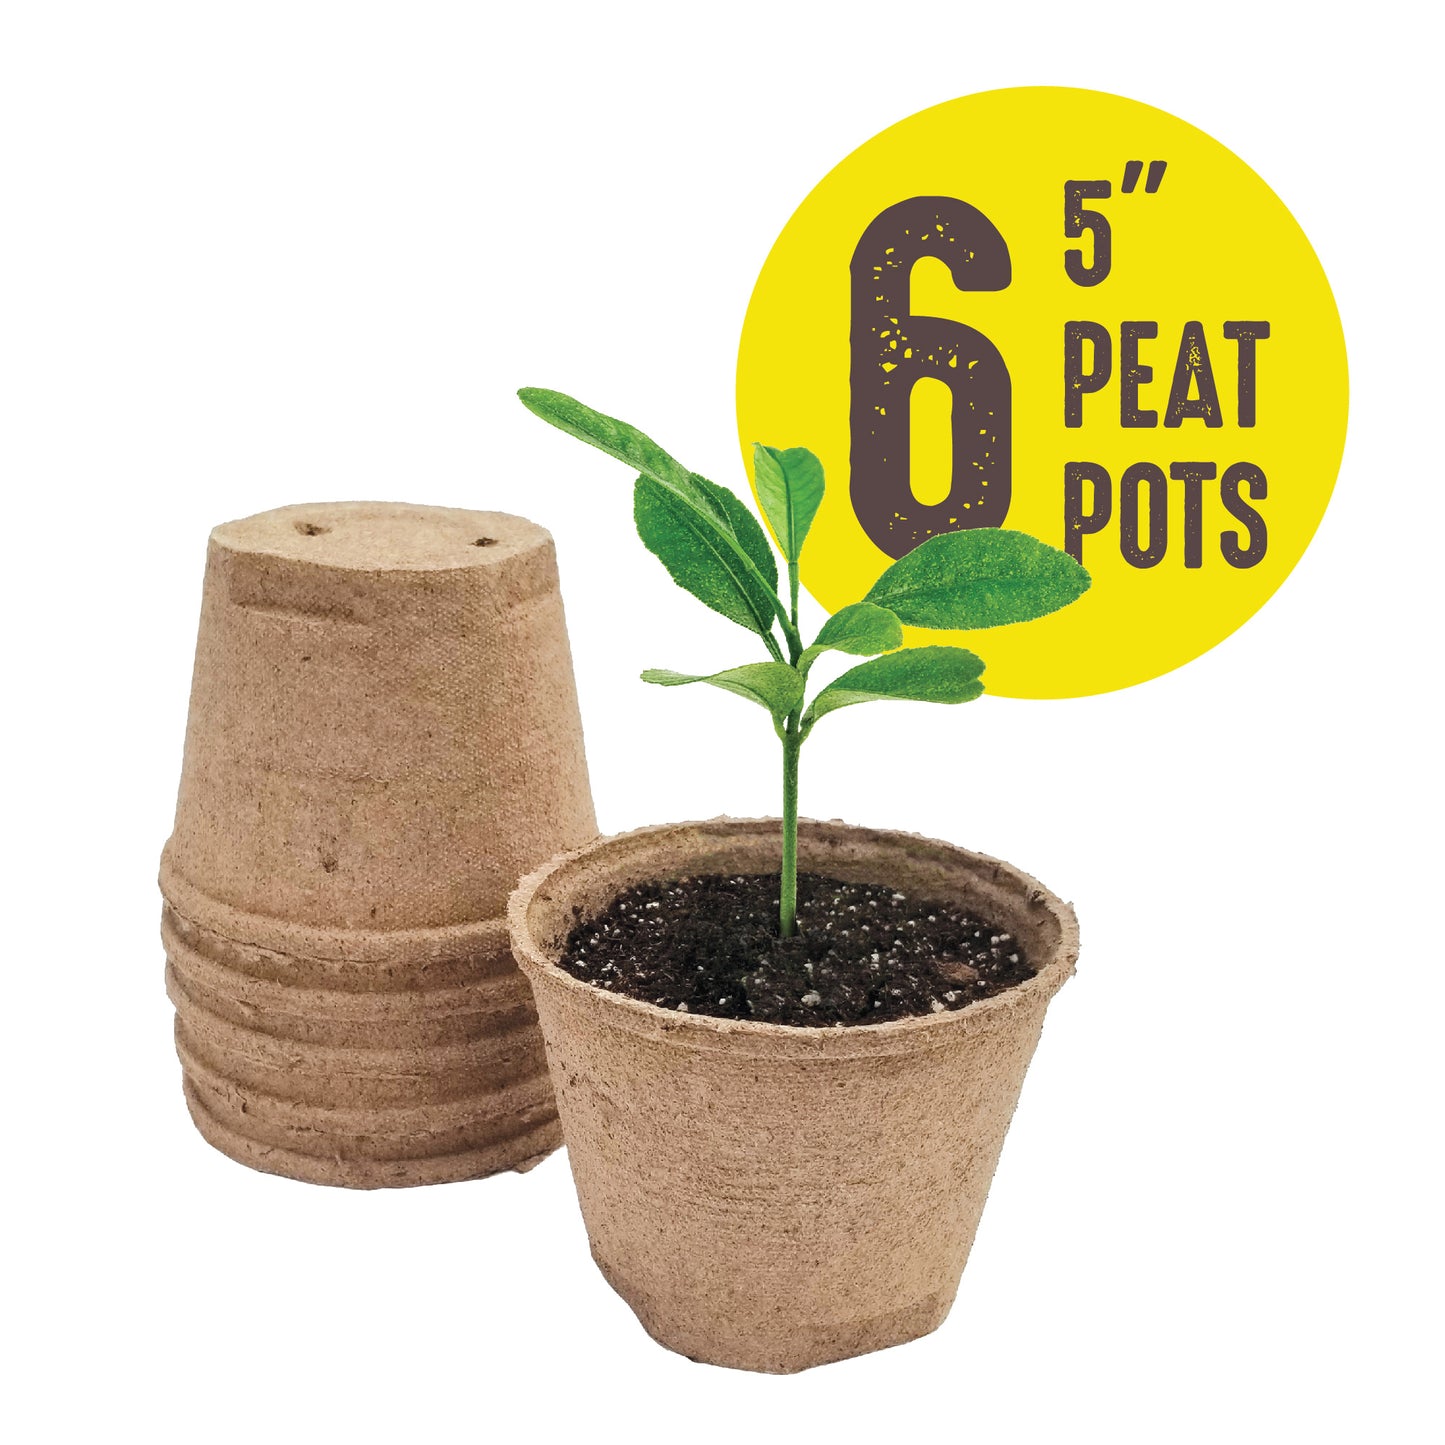 Jiffy-Pots, 5 inch Peat Pots